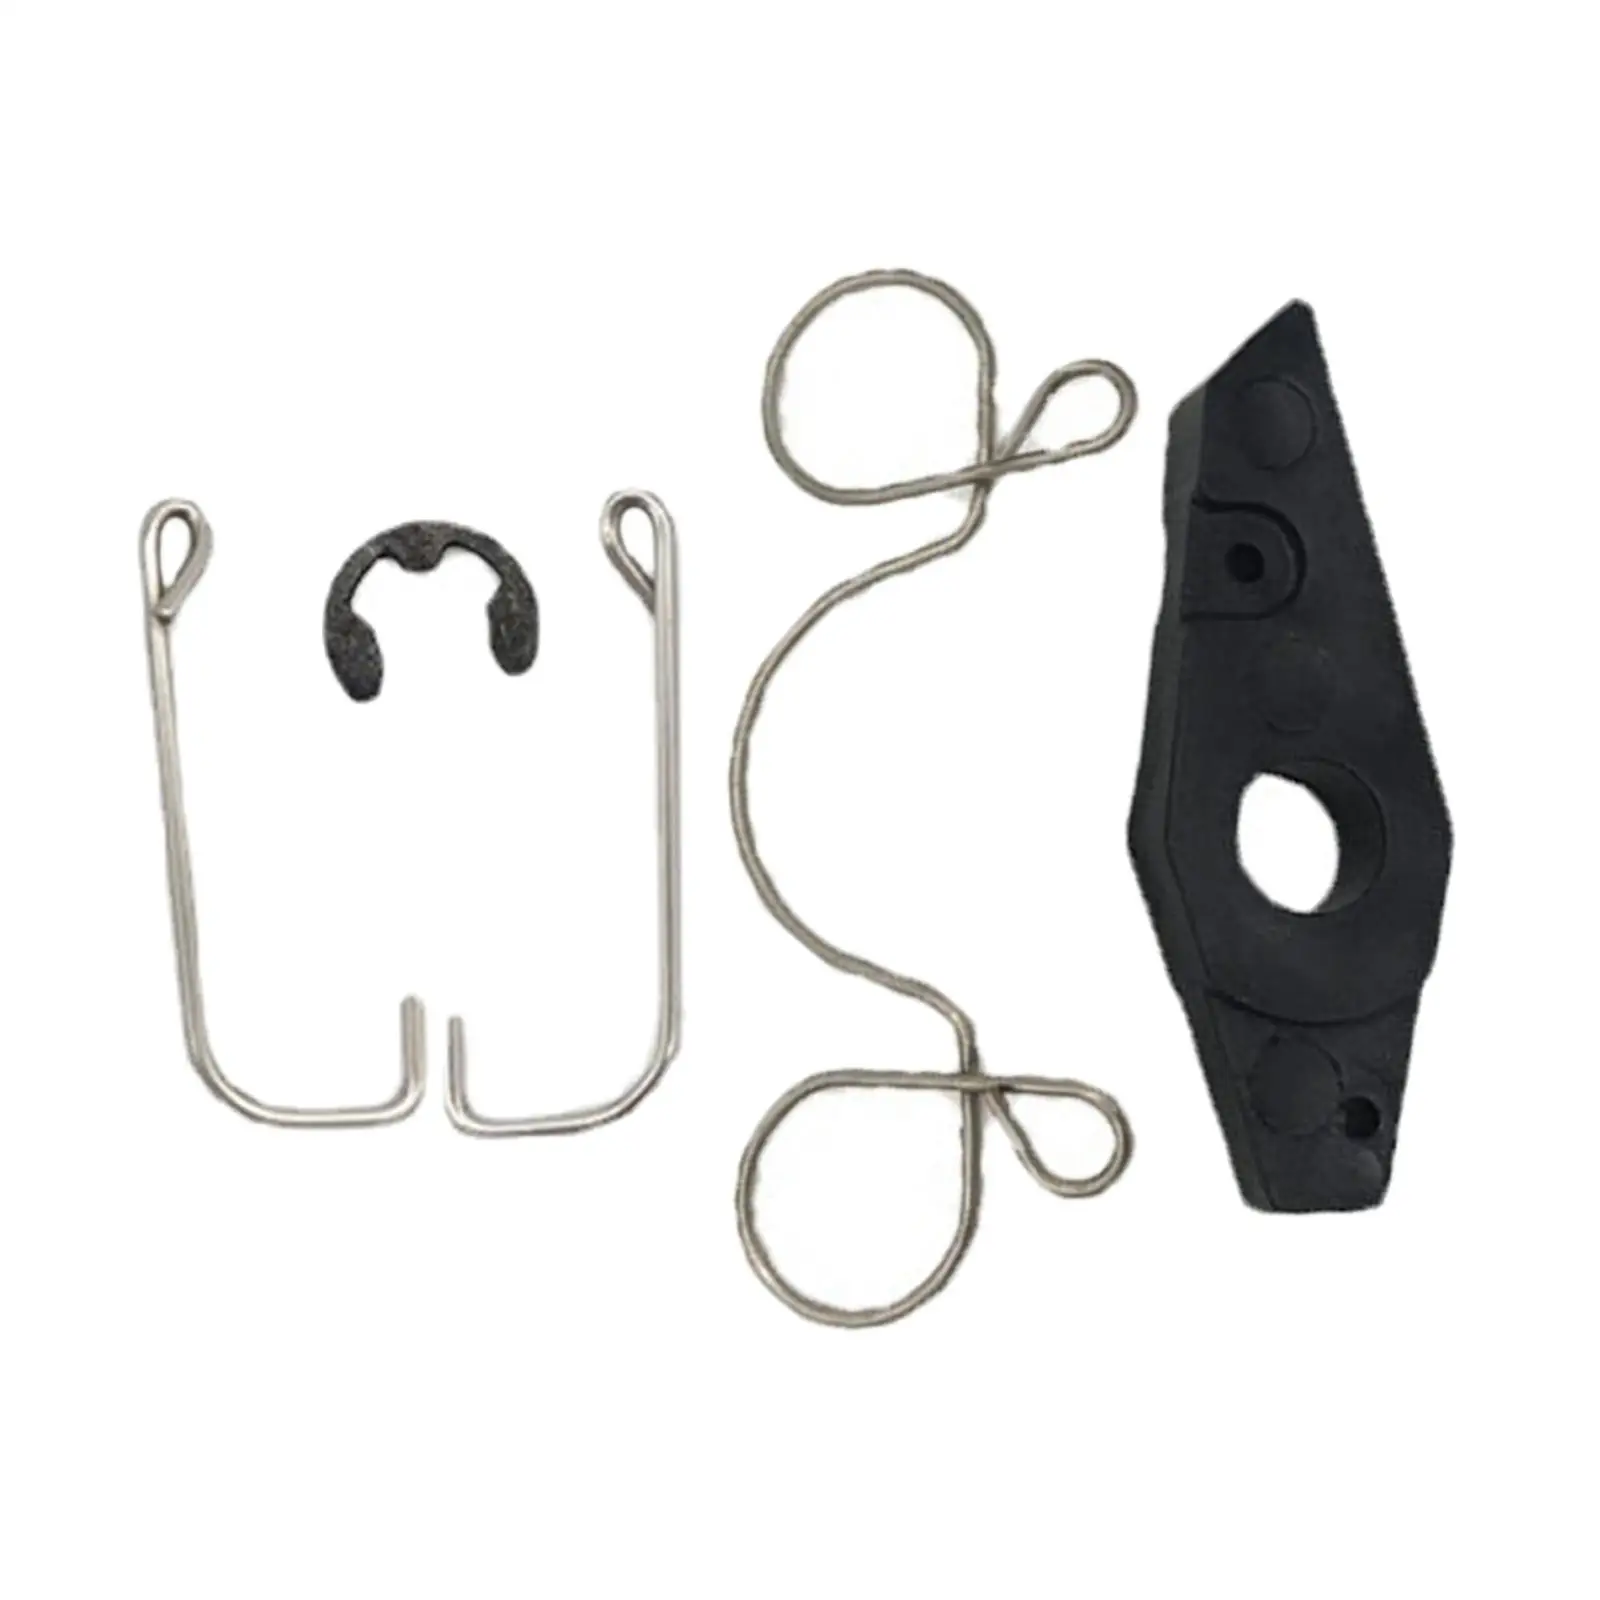 Pull Start Repair Tools Premium Portable for Yamaha Outboard 2-Storke